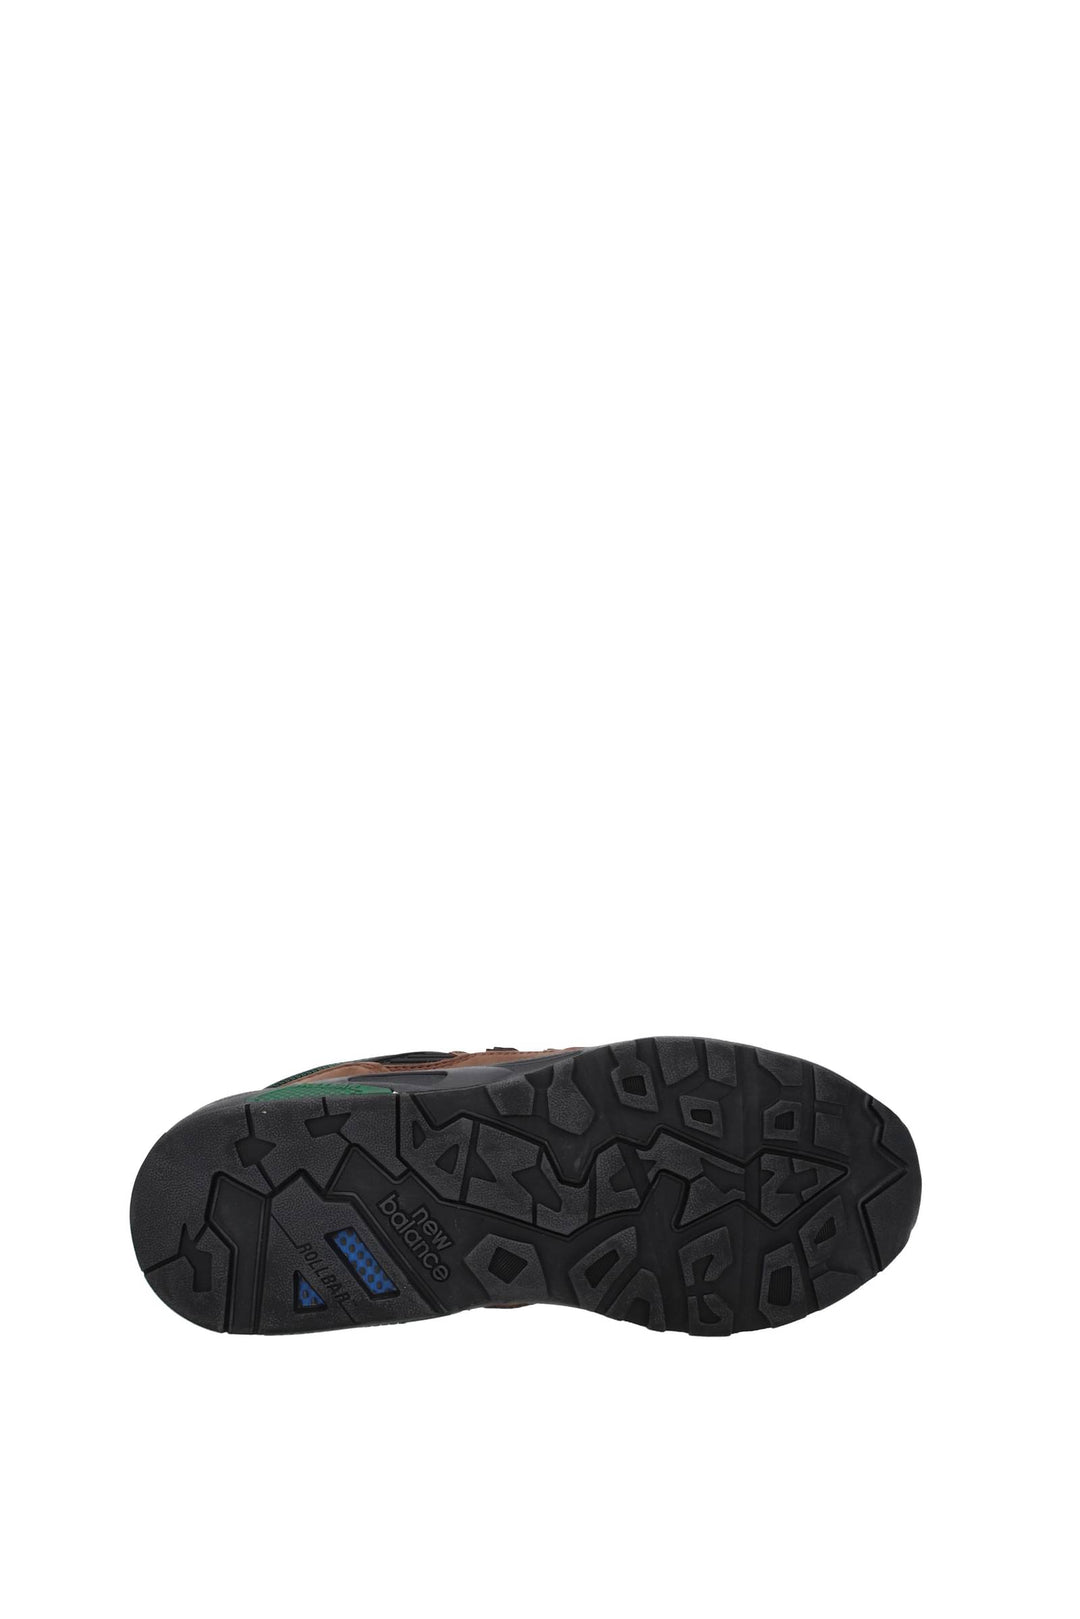 Sneakers 580 Camoscio Marrone Verde - New Balance - Uomo